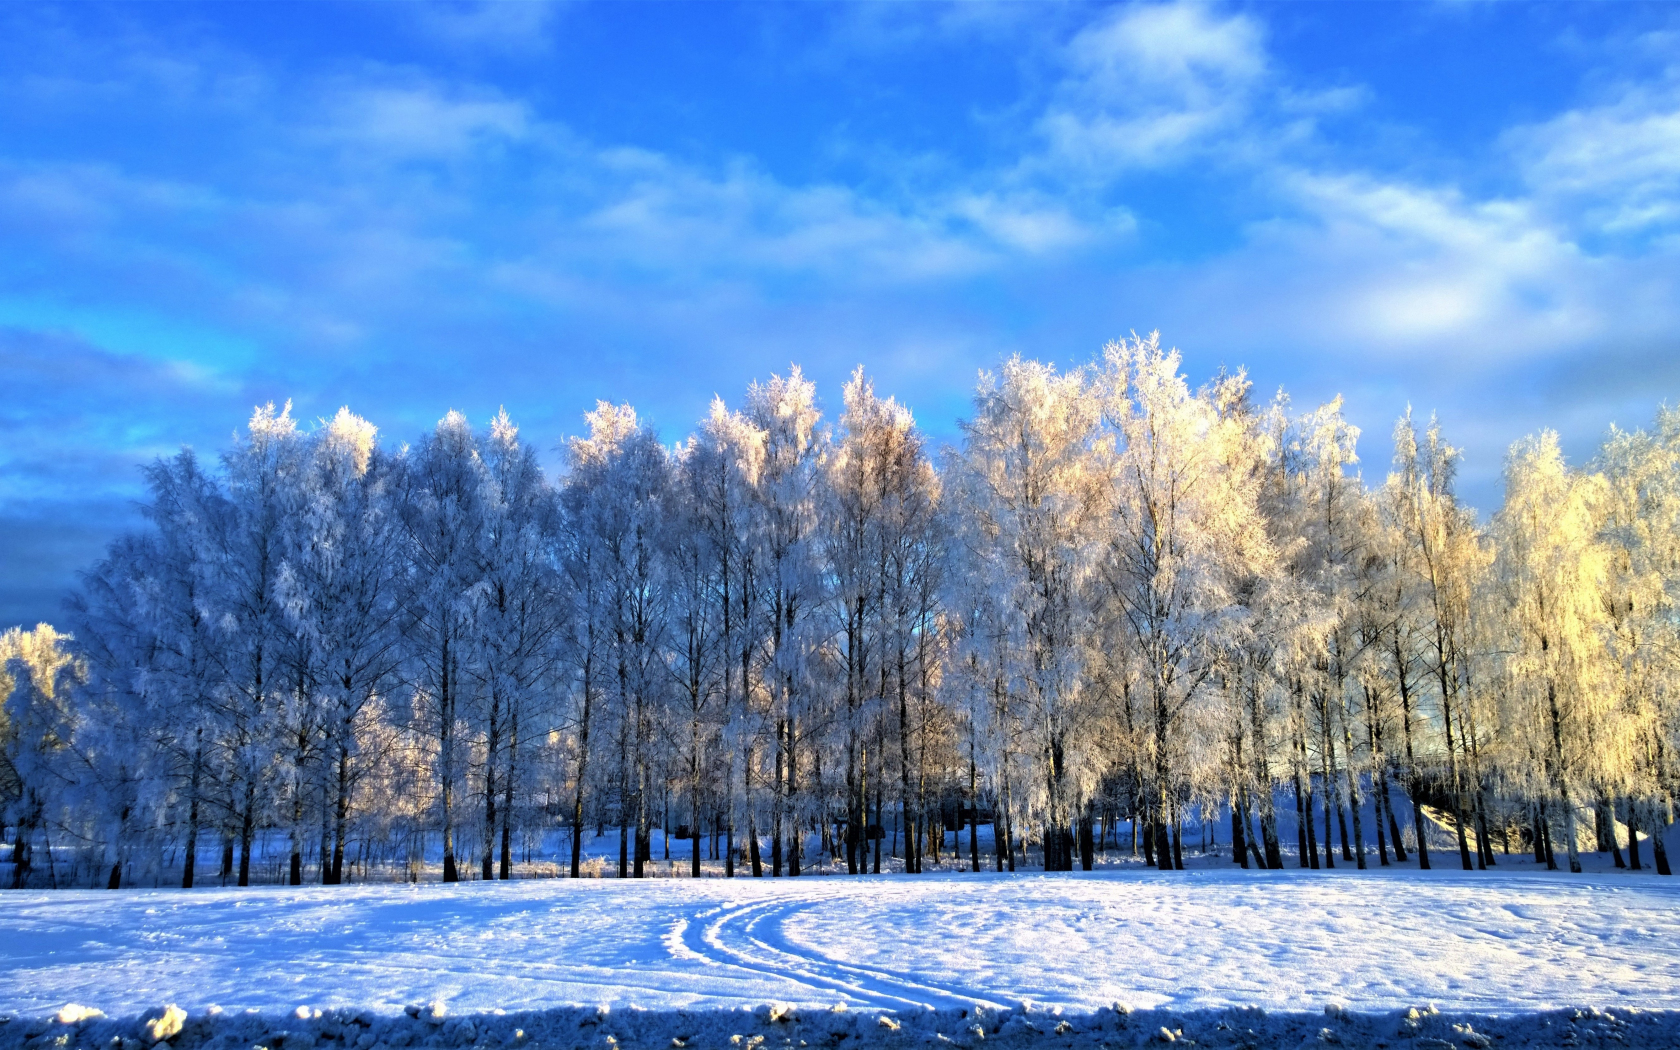 Download wallpaper 1680x1050 trees, winter, landscape, 16:10 widescreen 1680x1050 HD background, 1407